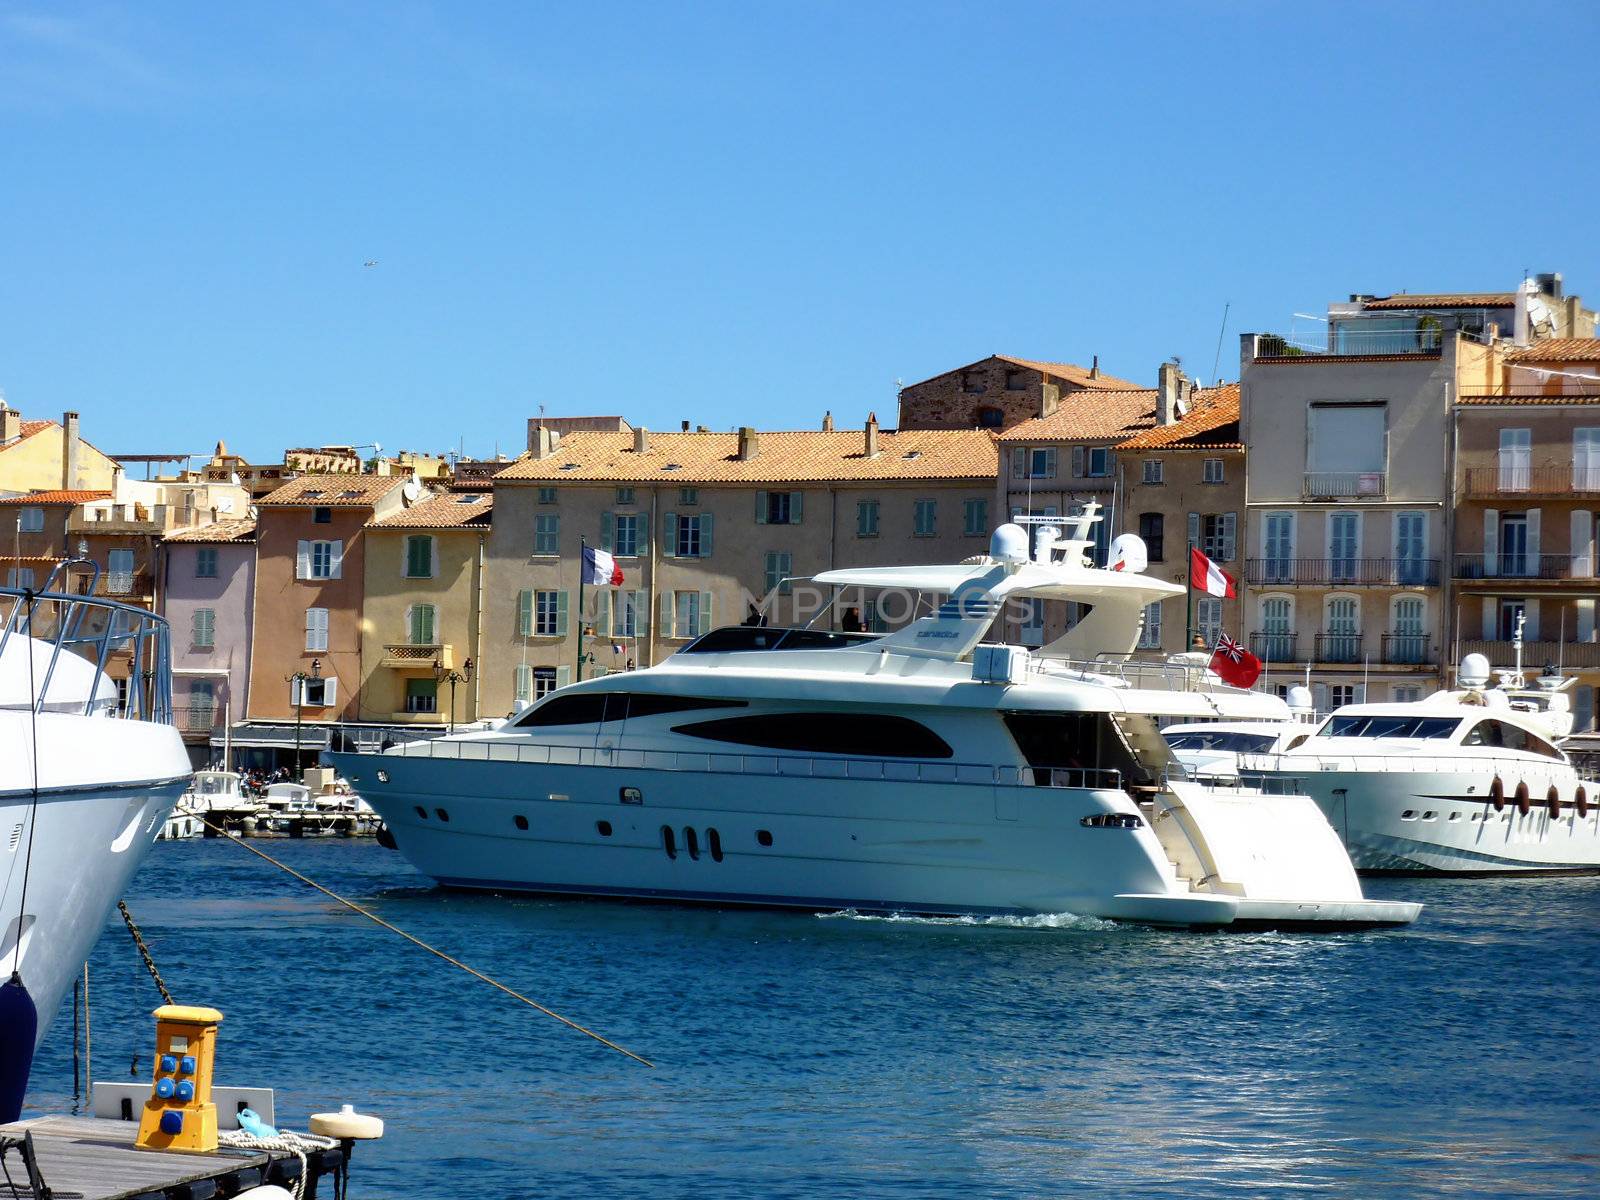 Yacht leaving of Saint-Tropez port, France by Elenaphotos21